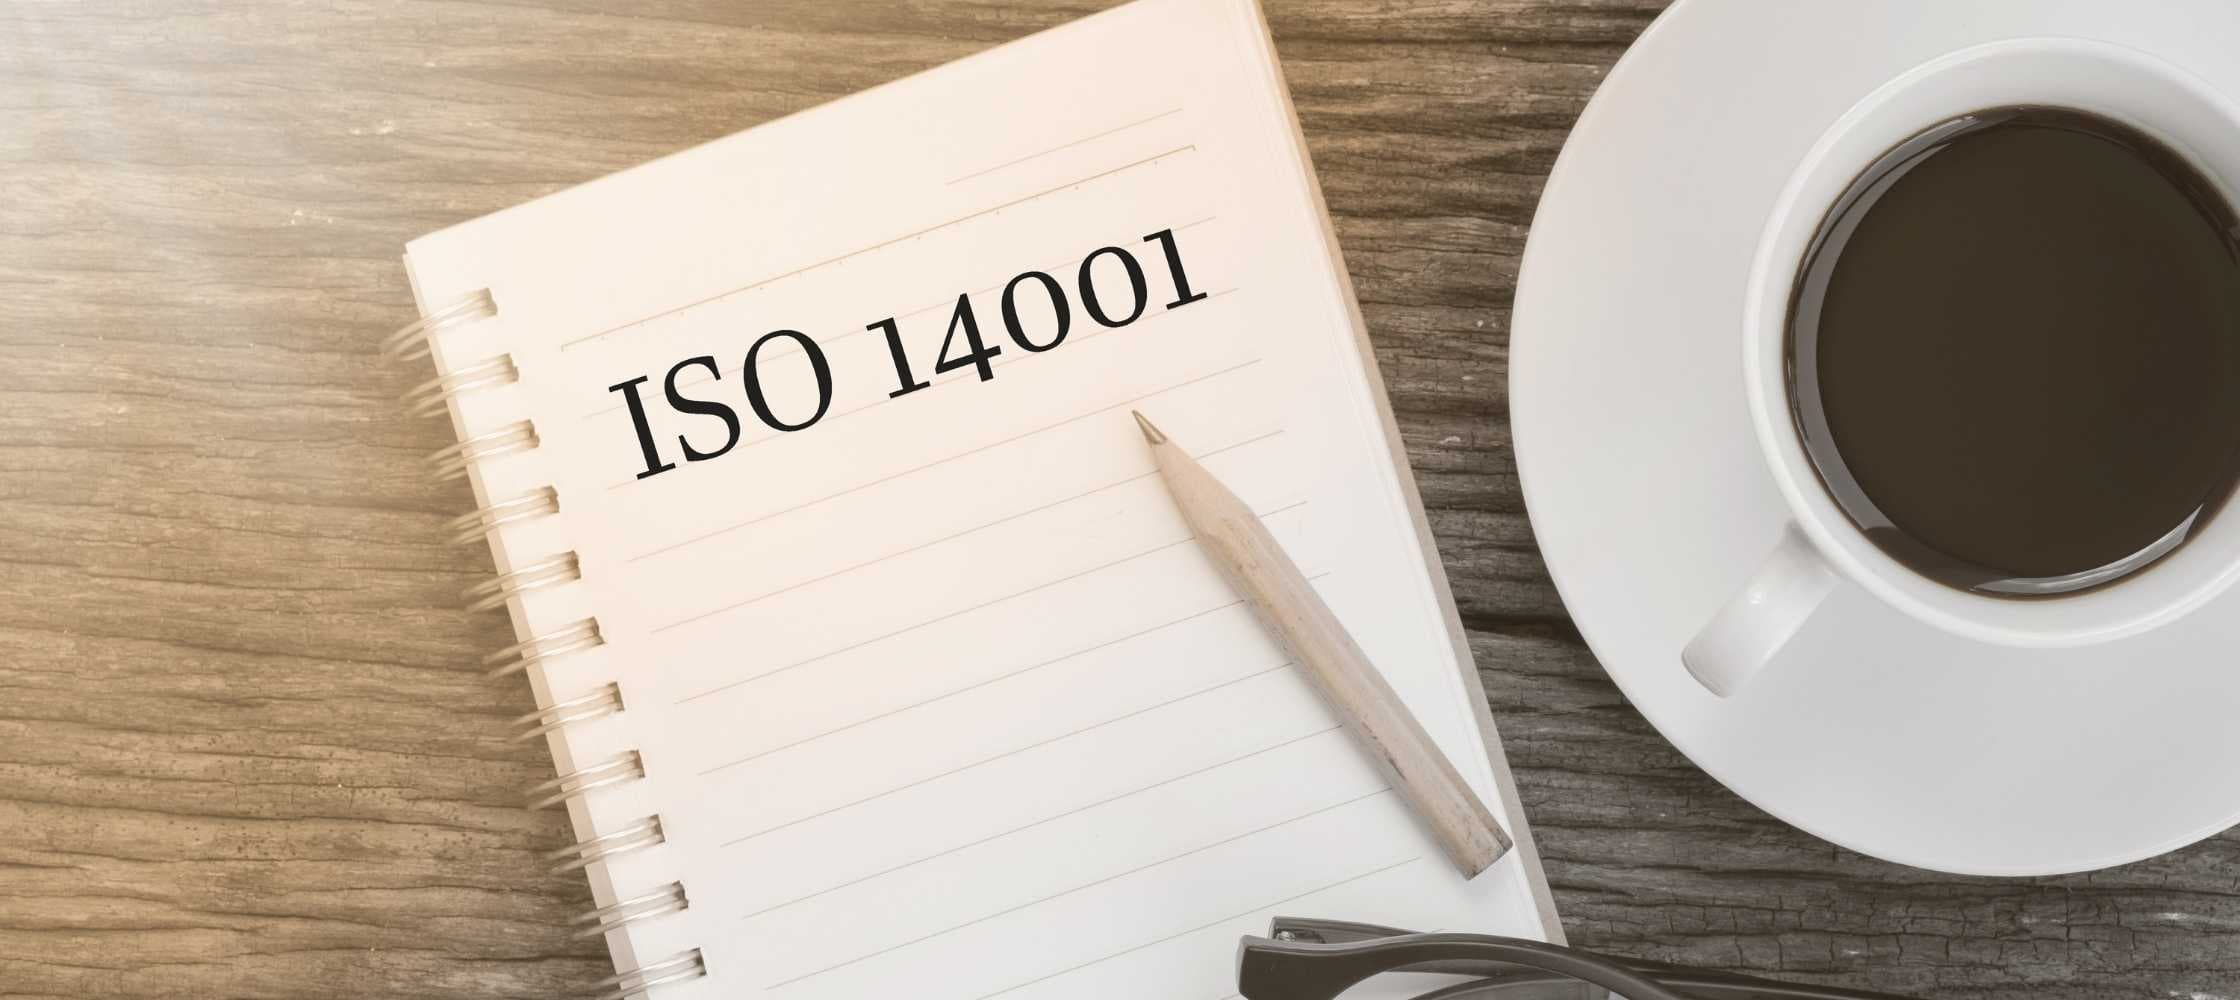 Formation ISO 14001 à Strasbourg